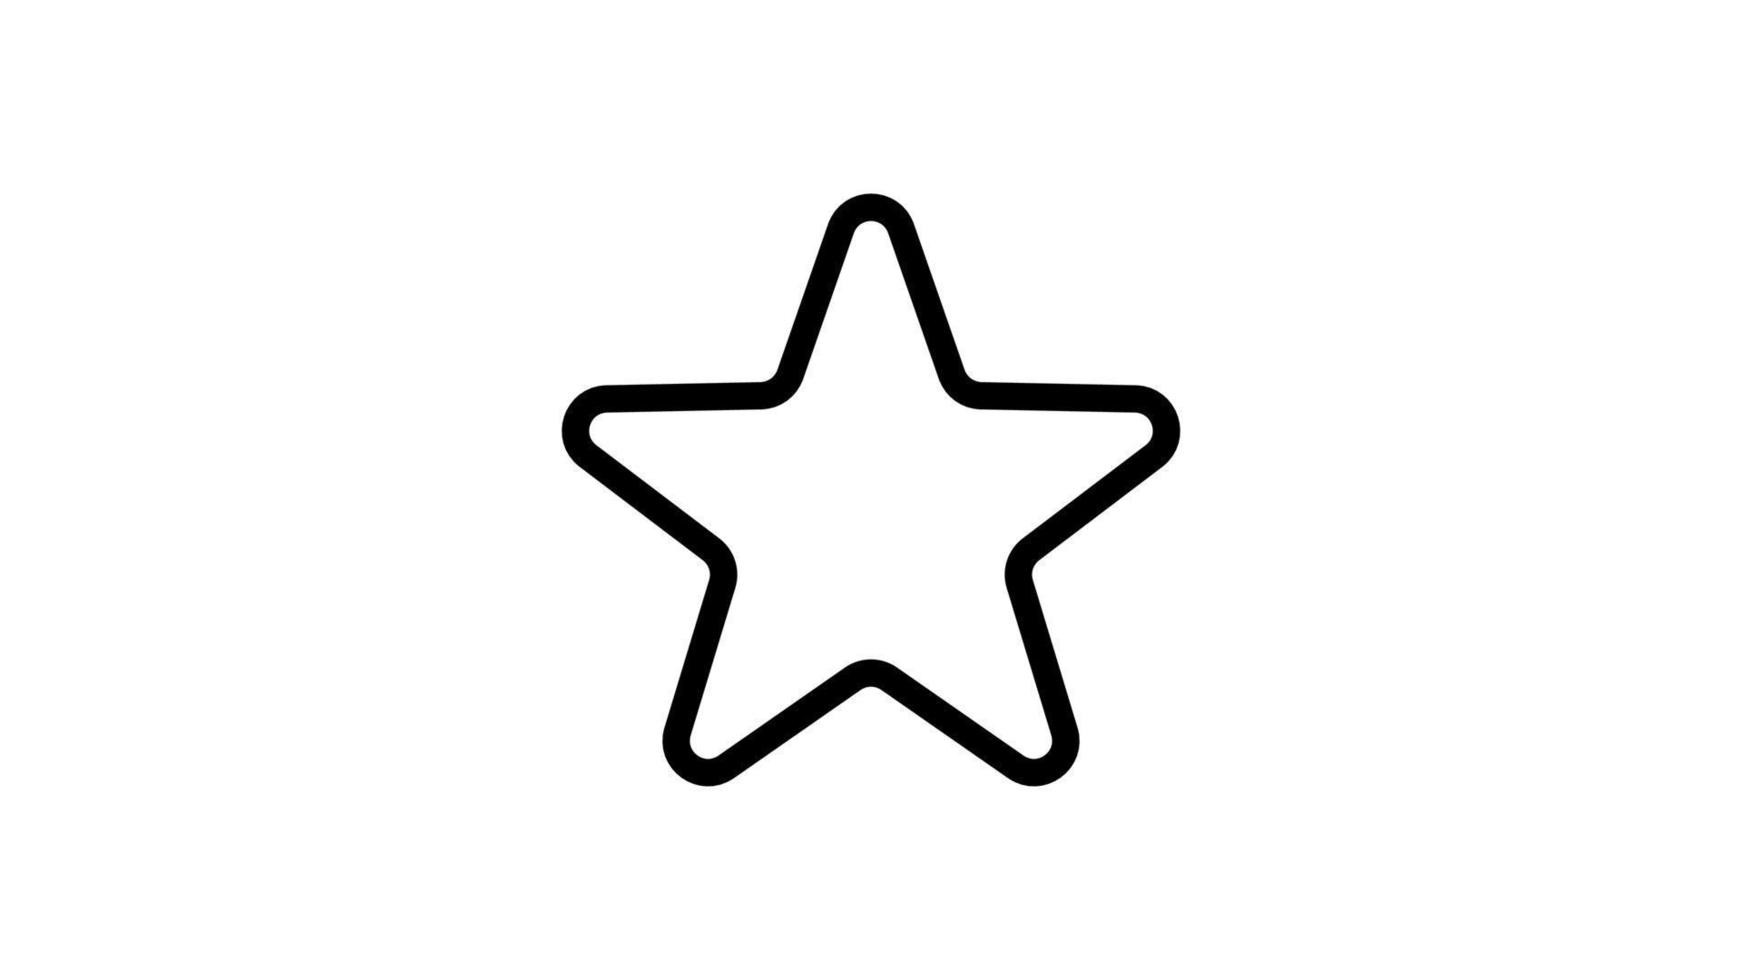 Star favorite symbol icon vector illustration